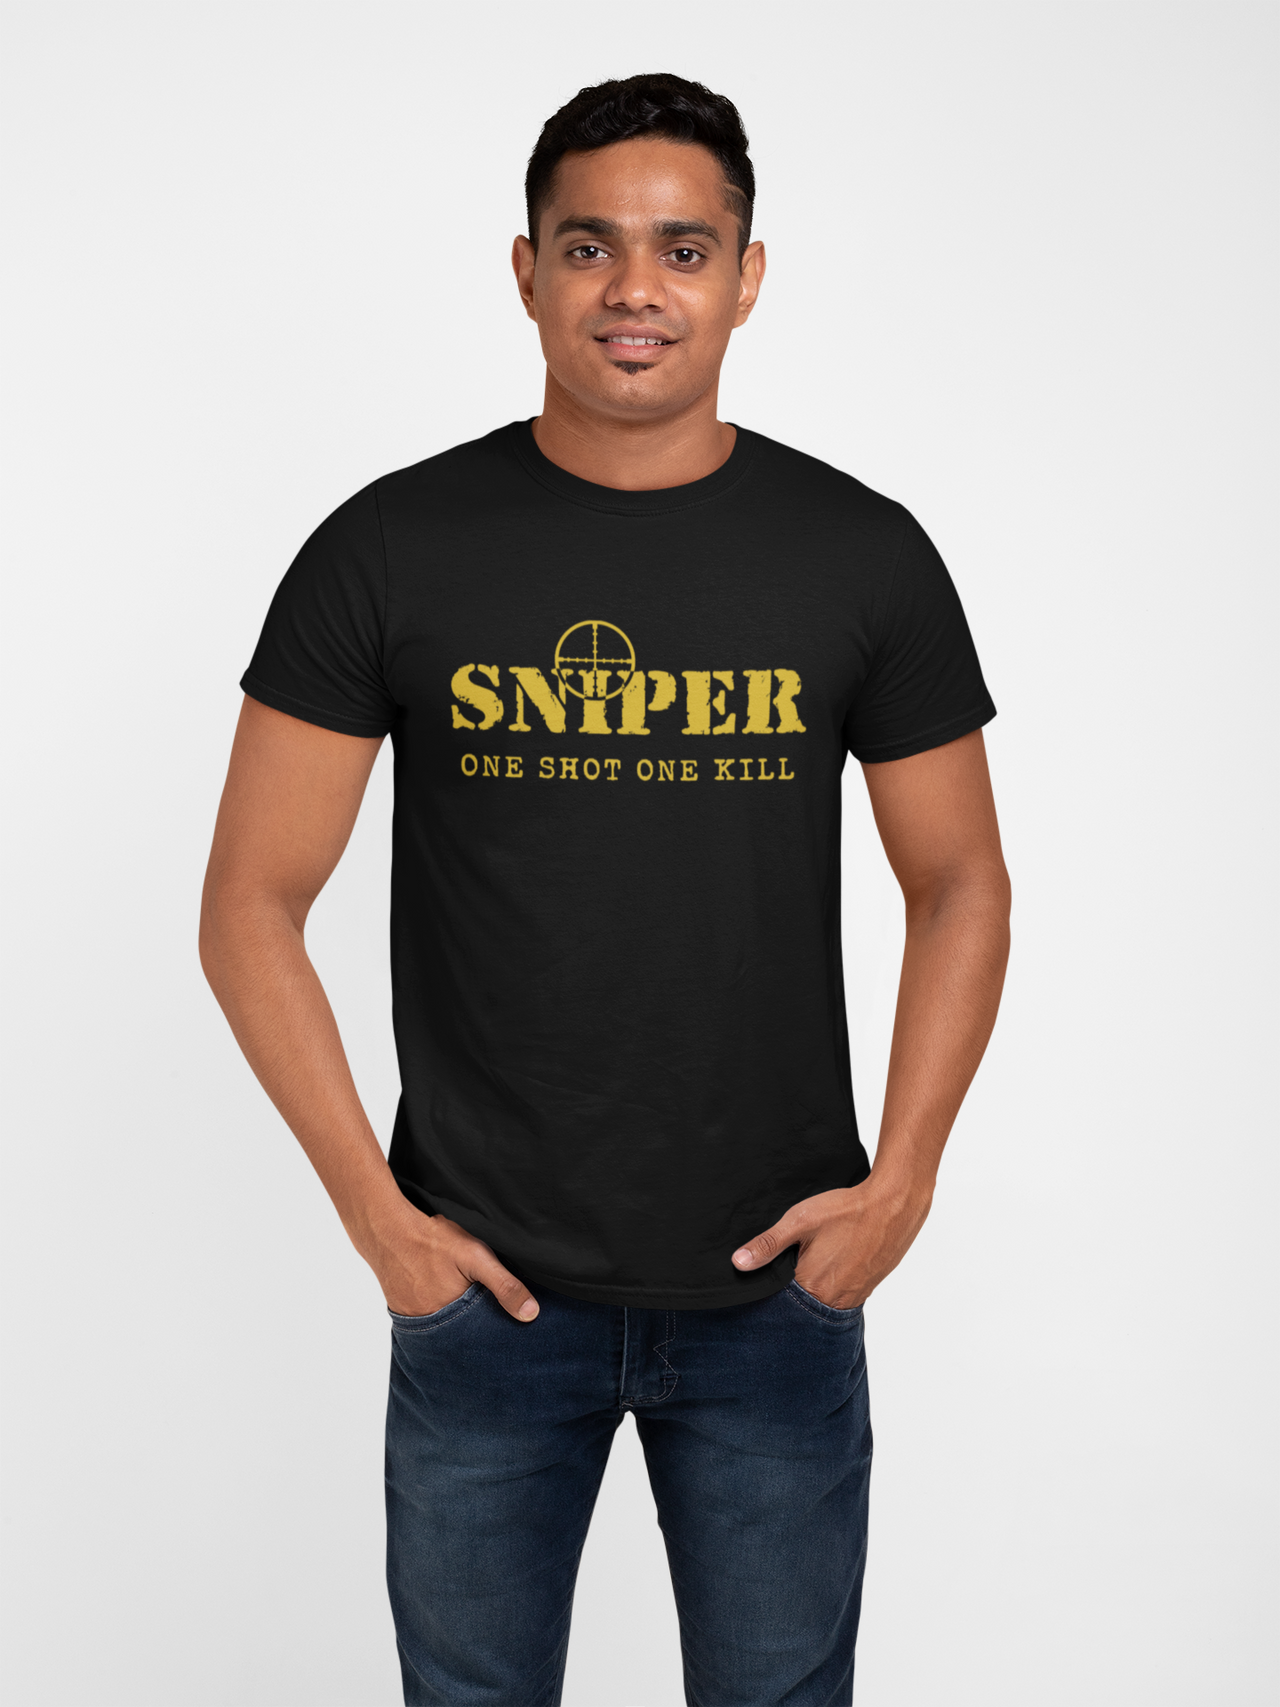 Sniper T-shirt - Sniper, One Shot, One Kill (Men)